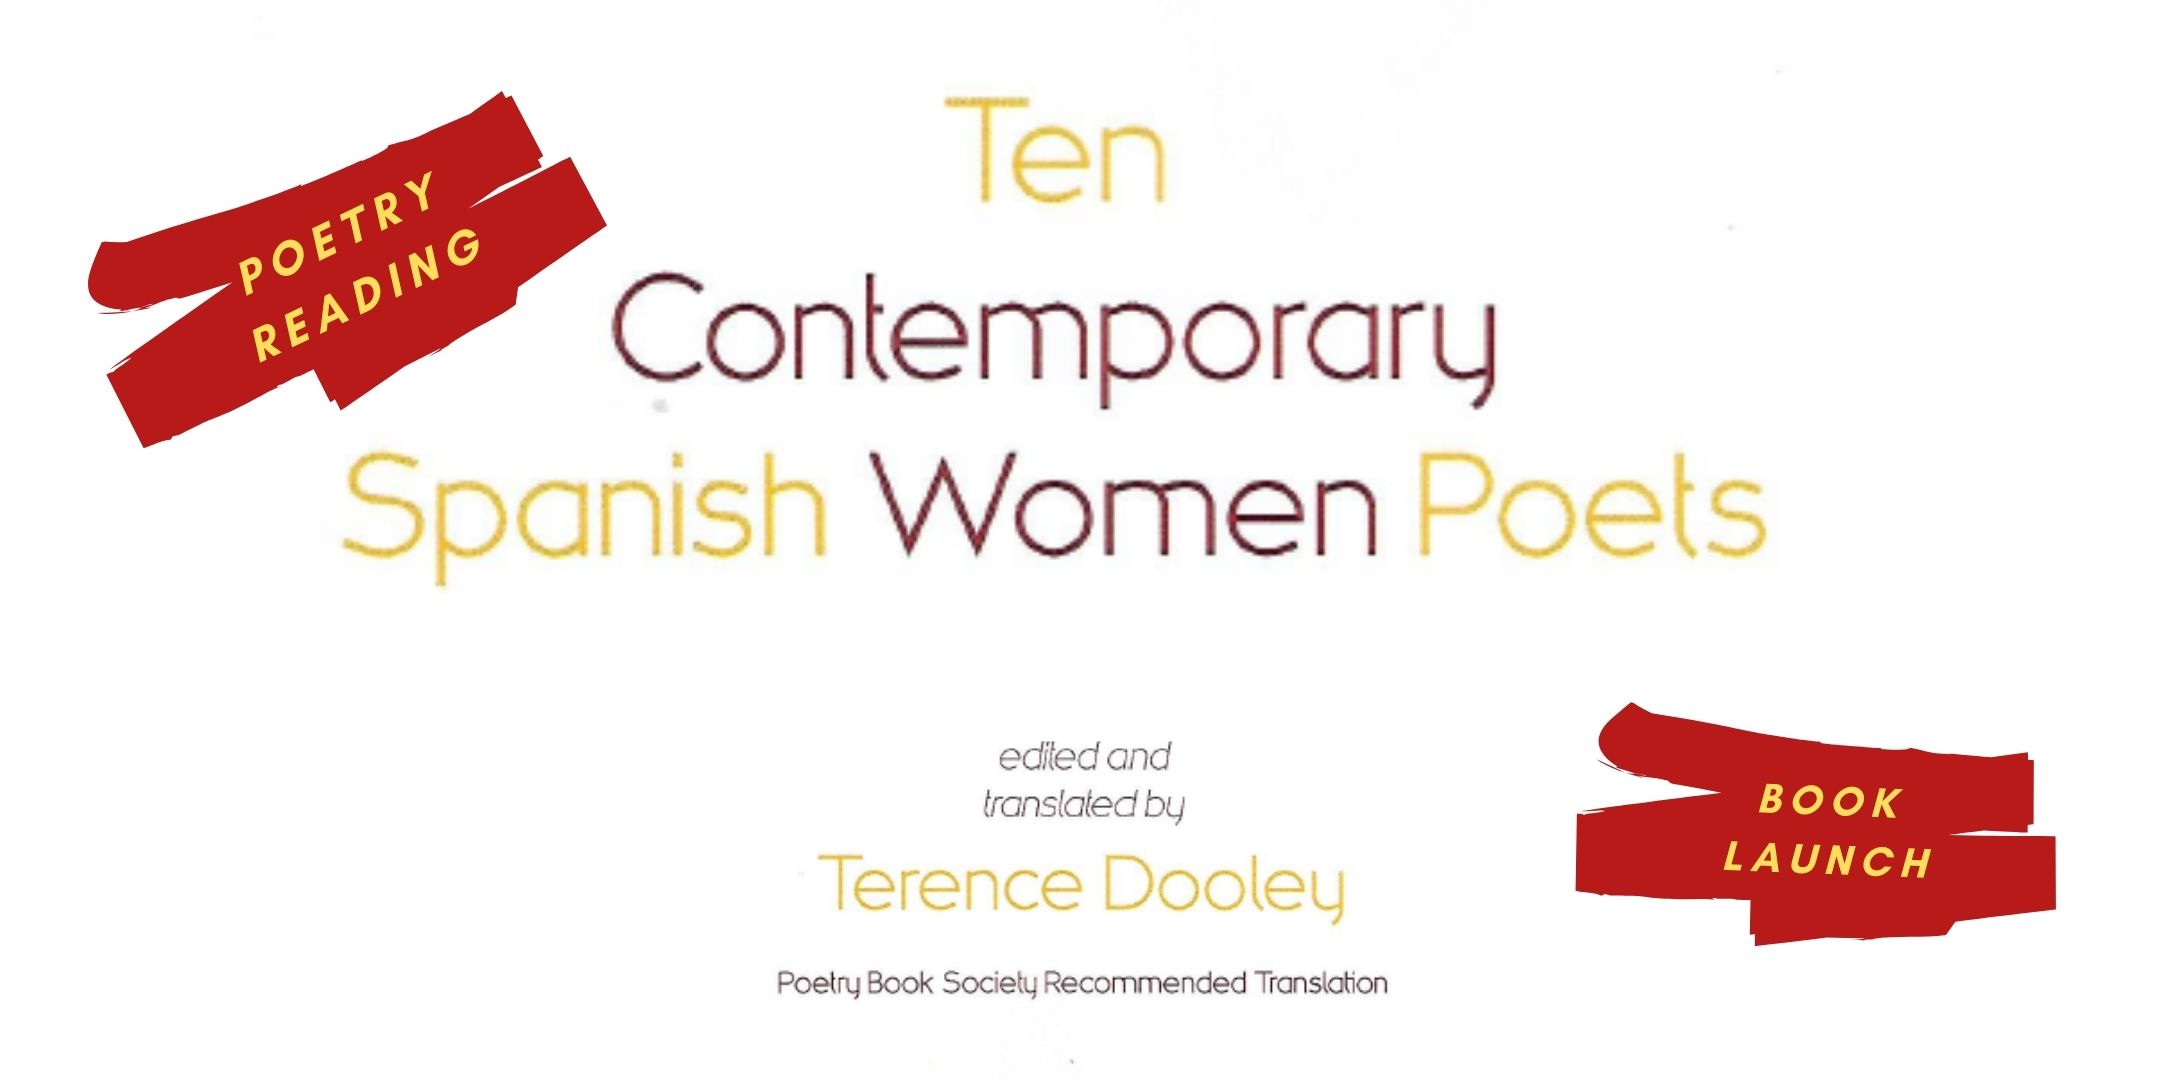 Ten contemporary Spanish women poets